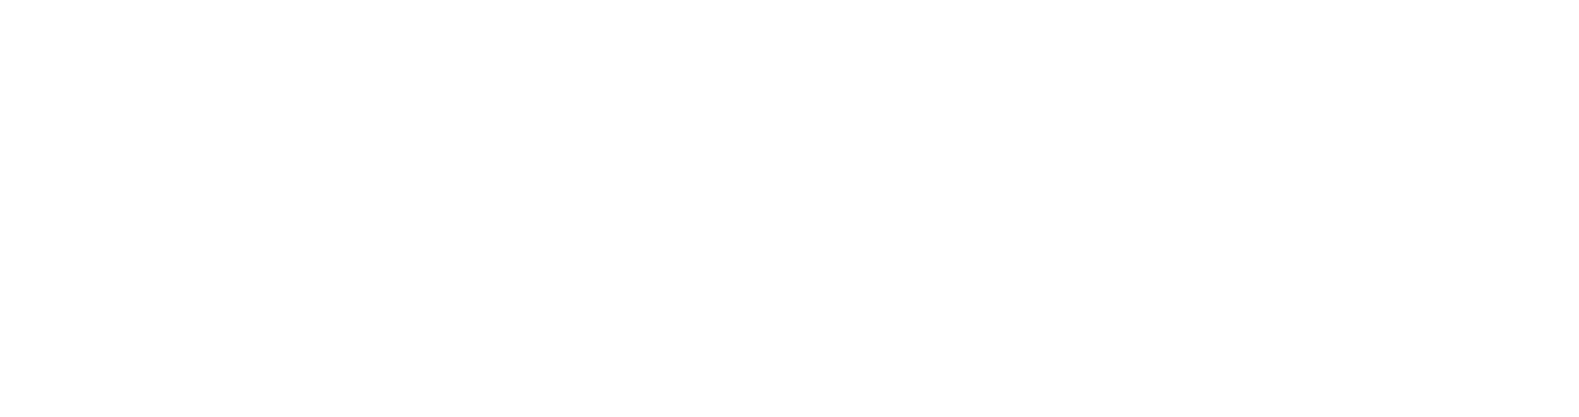 EnPro Industries
 Logo groß für dunkle Hintergründe (transparentes PNG)